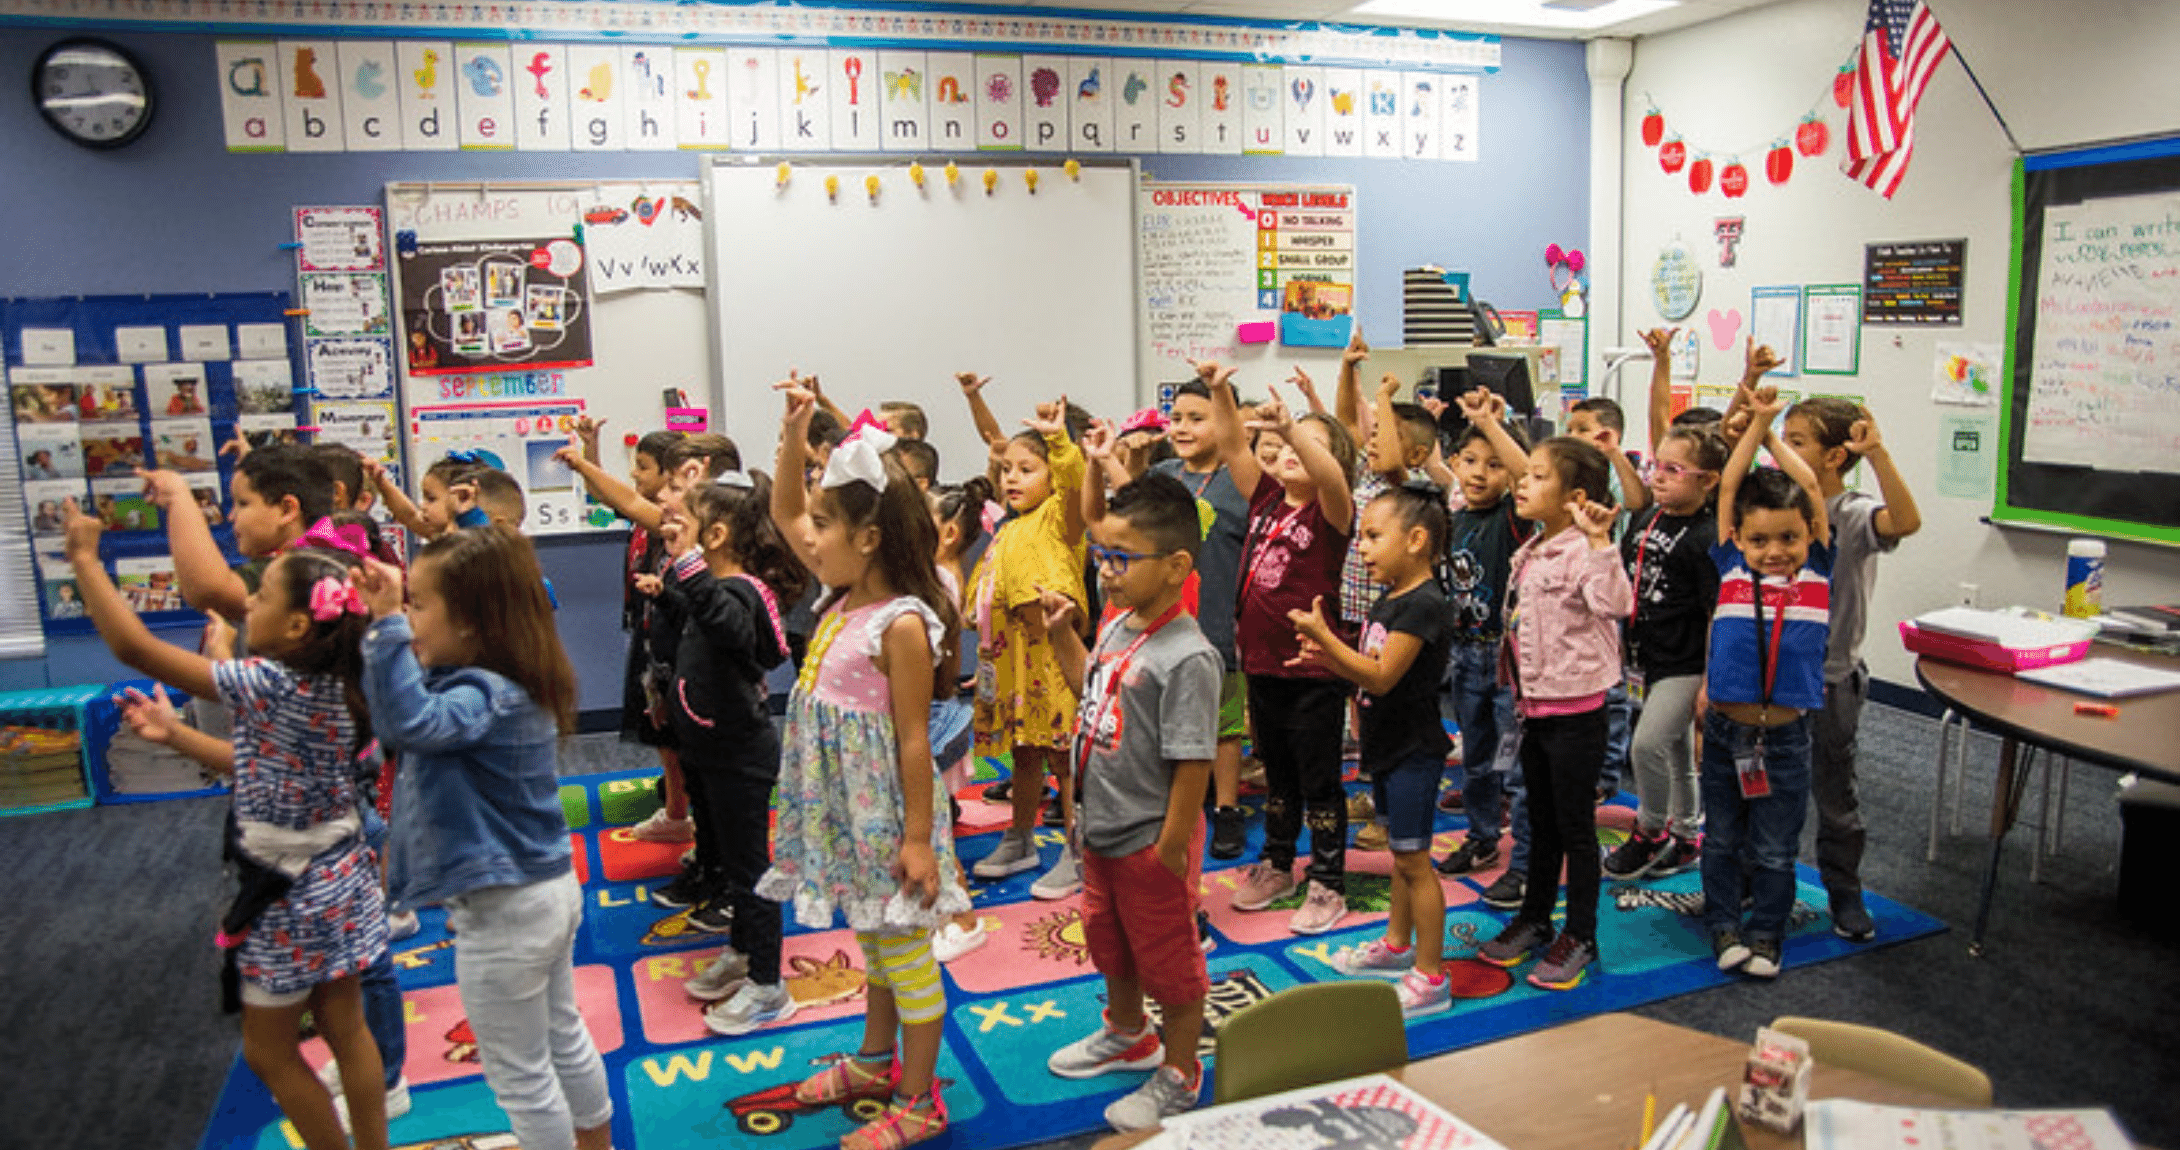 Kinder students raising hands in classroom